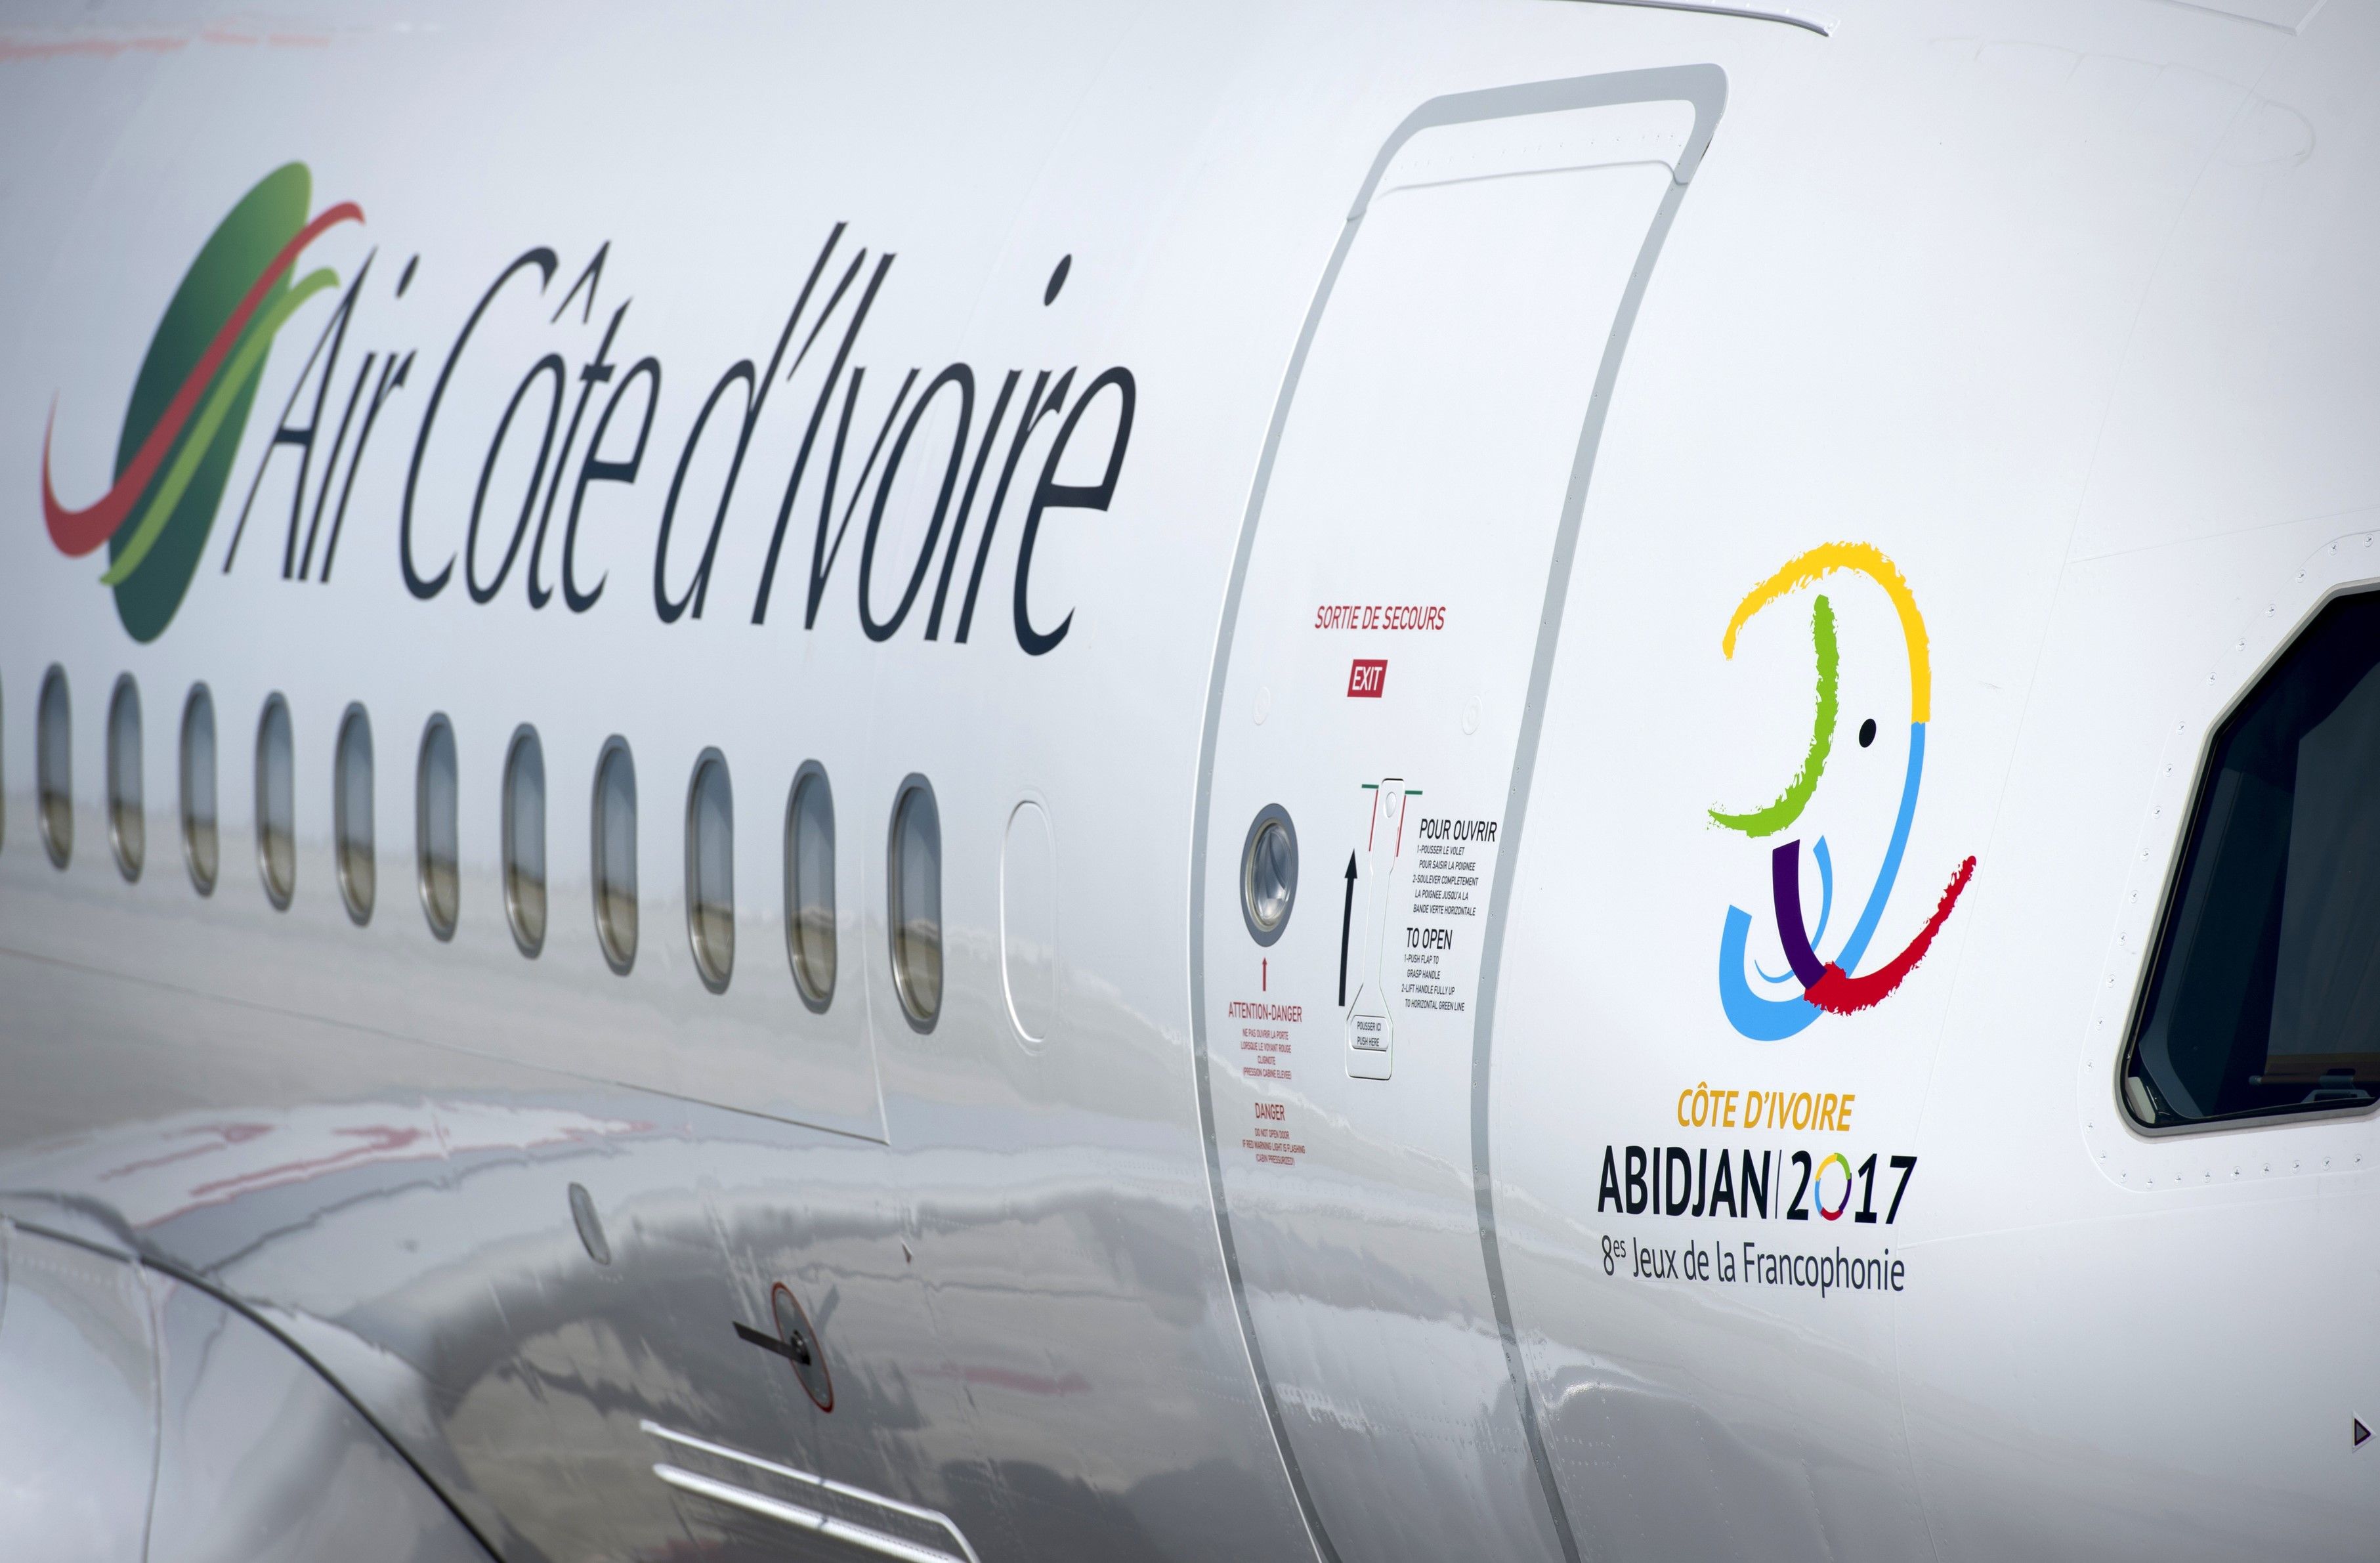 Air Cote d'Ivoire Airbus A320